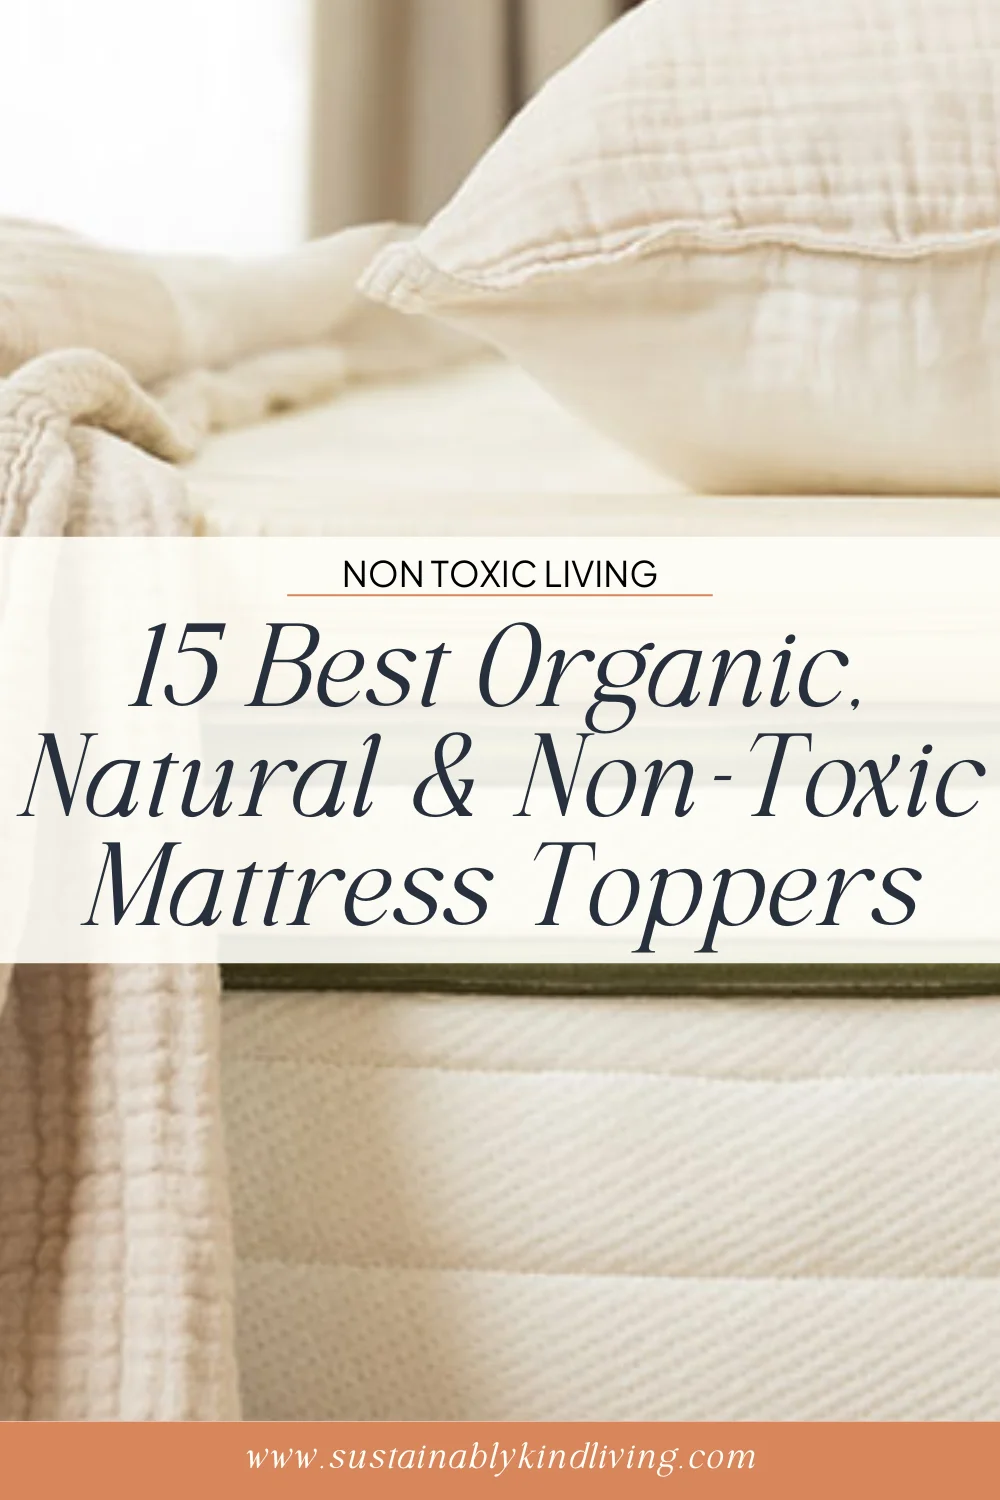 Organic mattress toppers